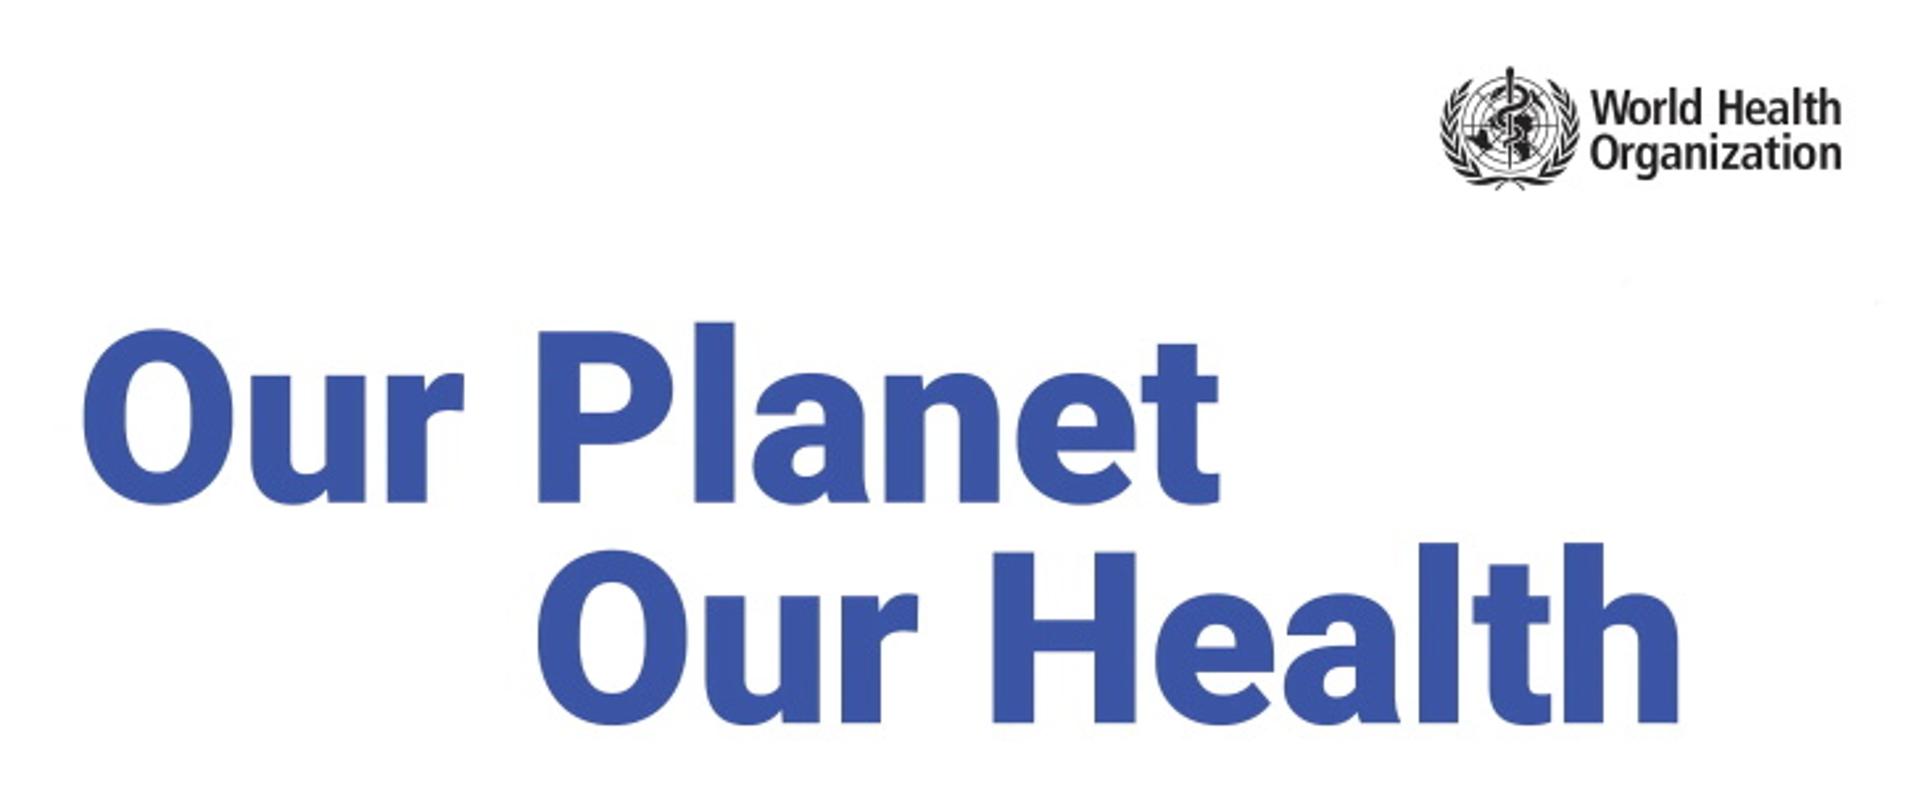 Baner z napisem: Our Planet our health